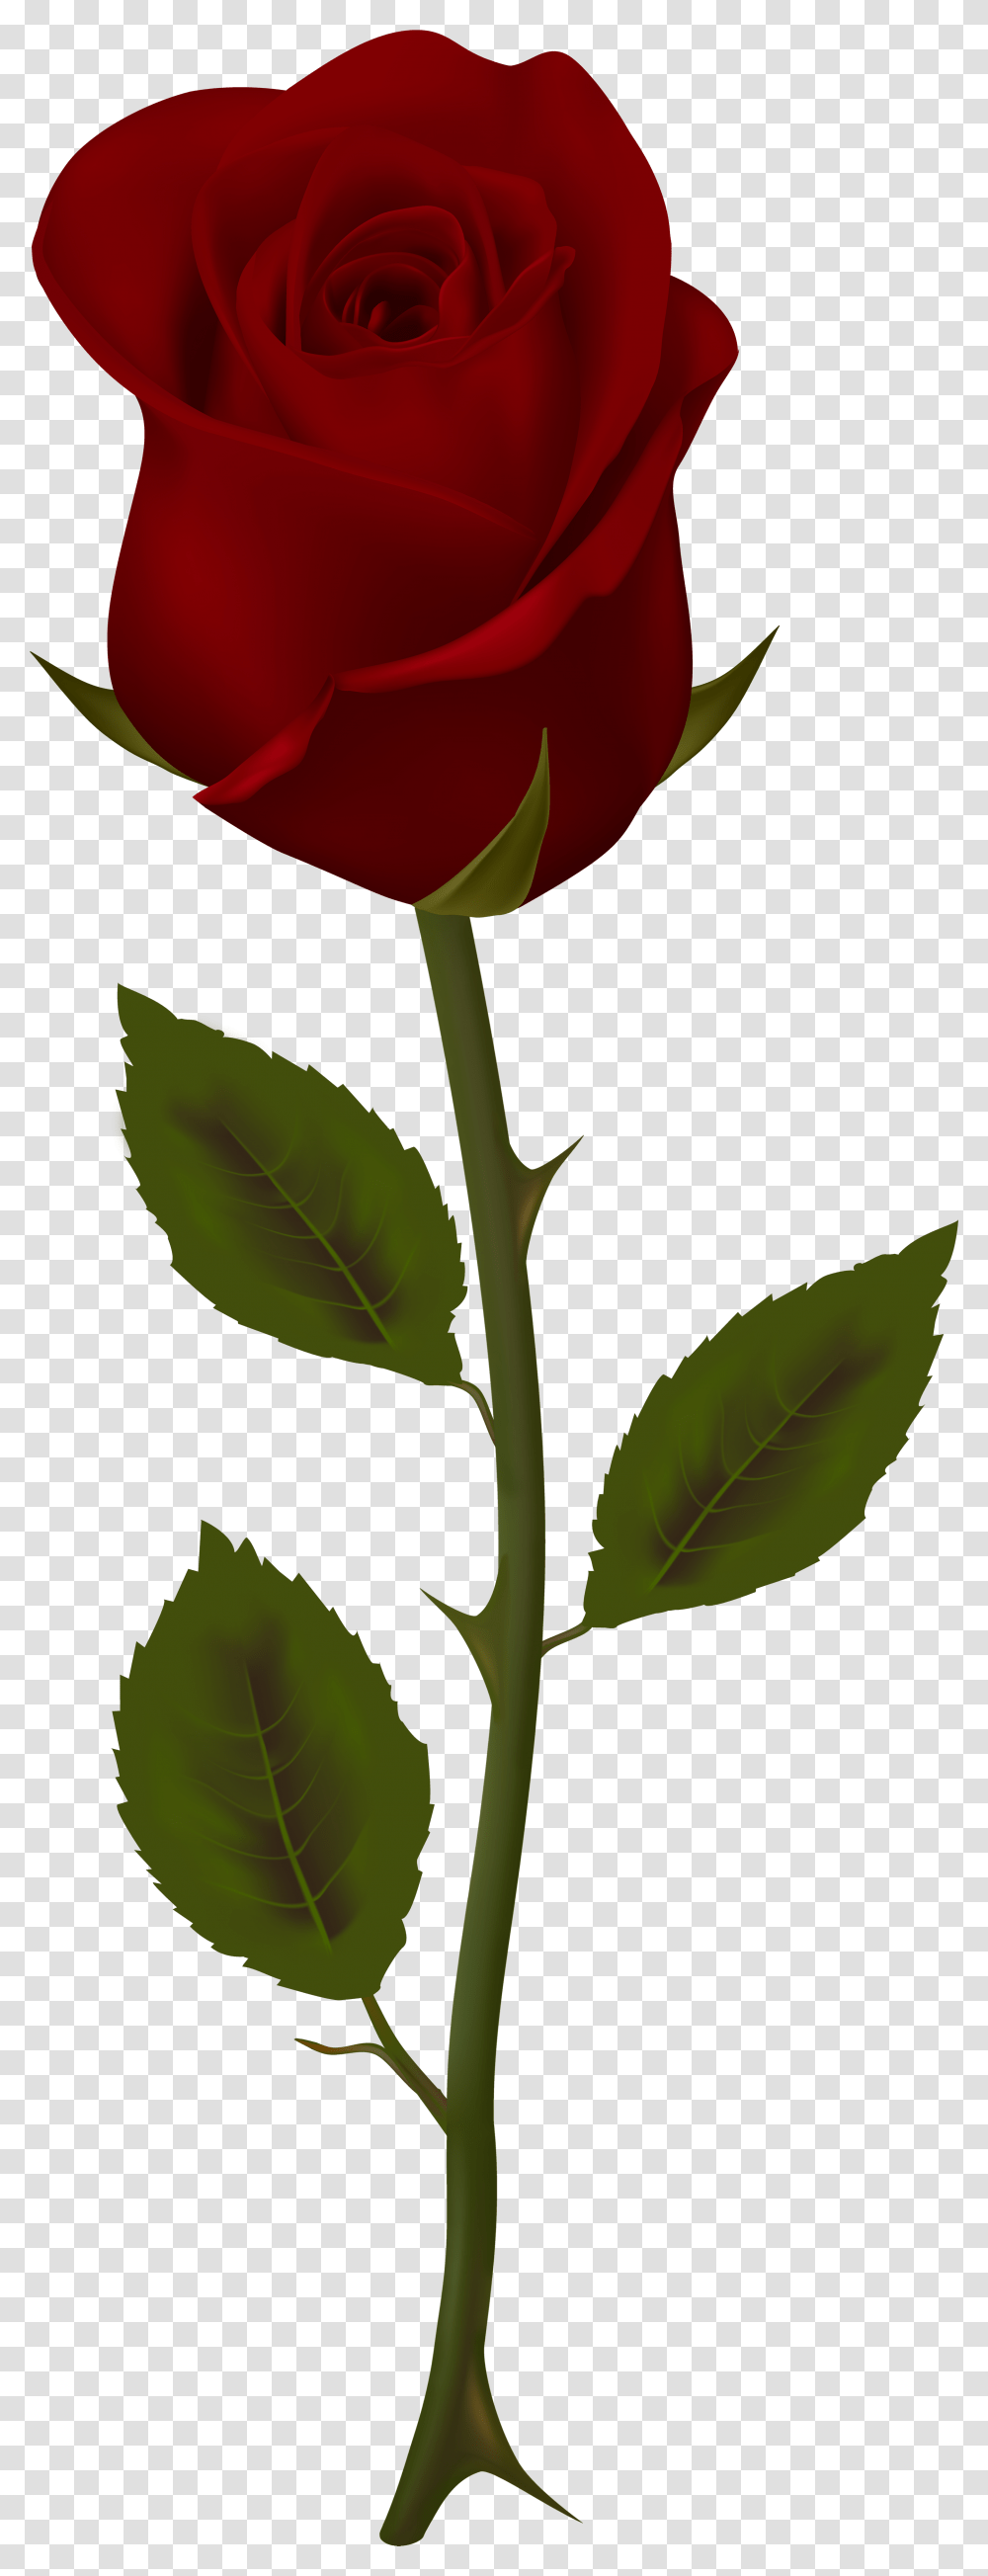 Library Of 3d Flower Vector Freeuse Stock Files Red Rose Background, Plant, Blossom, Leaf, Petal Transparent Png